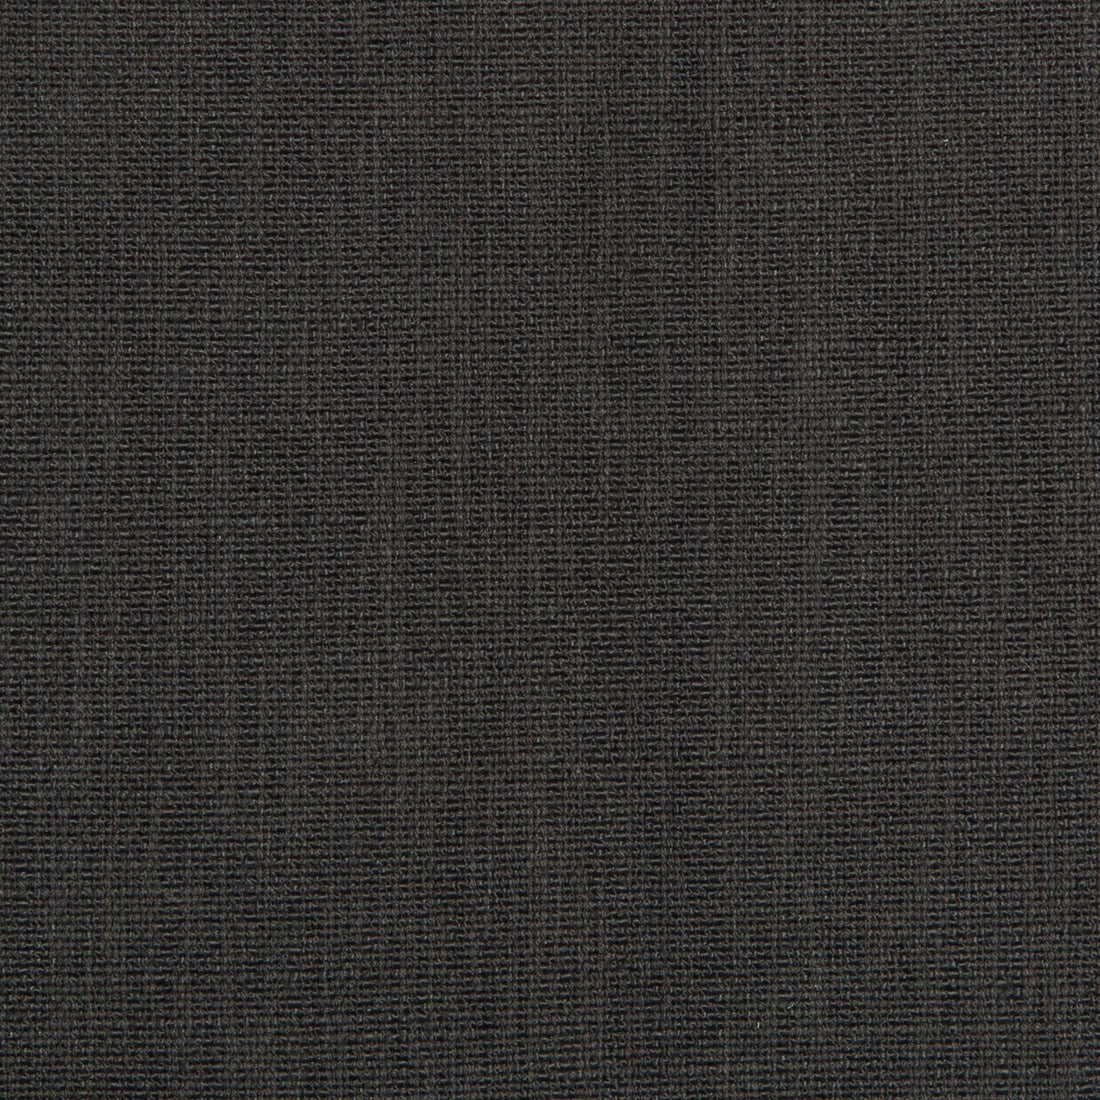 Kravet Smart fabric in 35226-21 color - pattern 35226.21.0 - by Kravet Smart in the Performance Kravetarmor collection